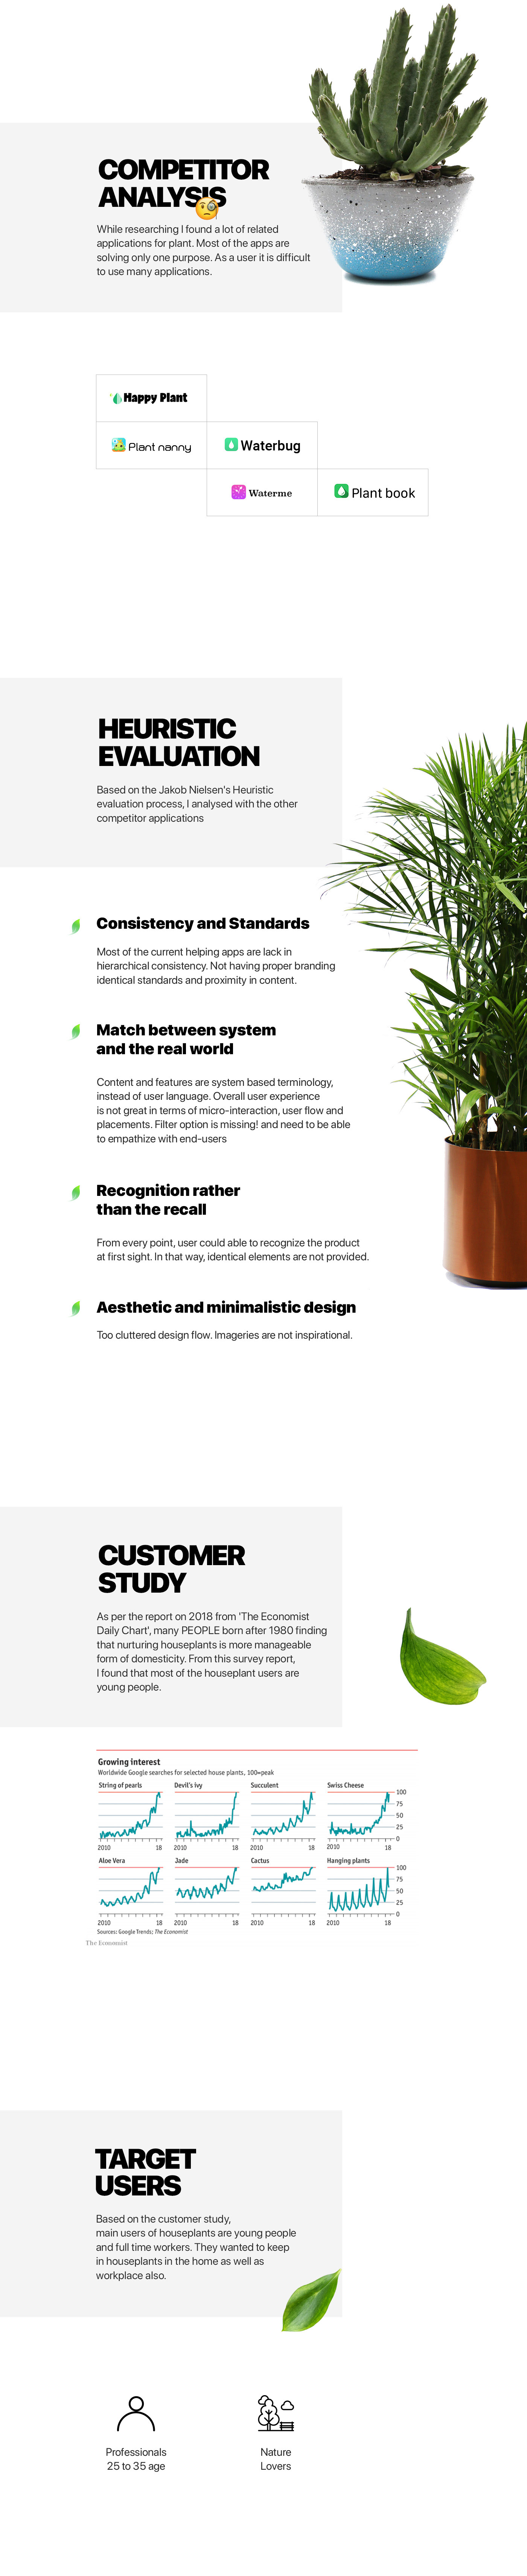 plantcareapp prototype experiencedesign appforplants adobexd CaseStudy redesign motiondesign interactiveapp uiux